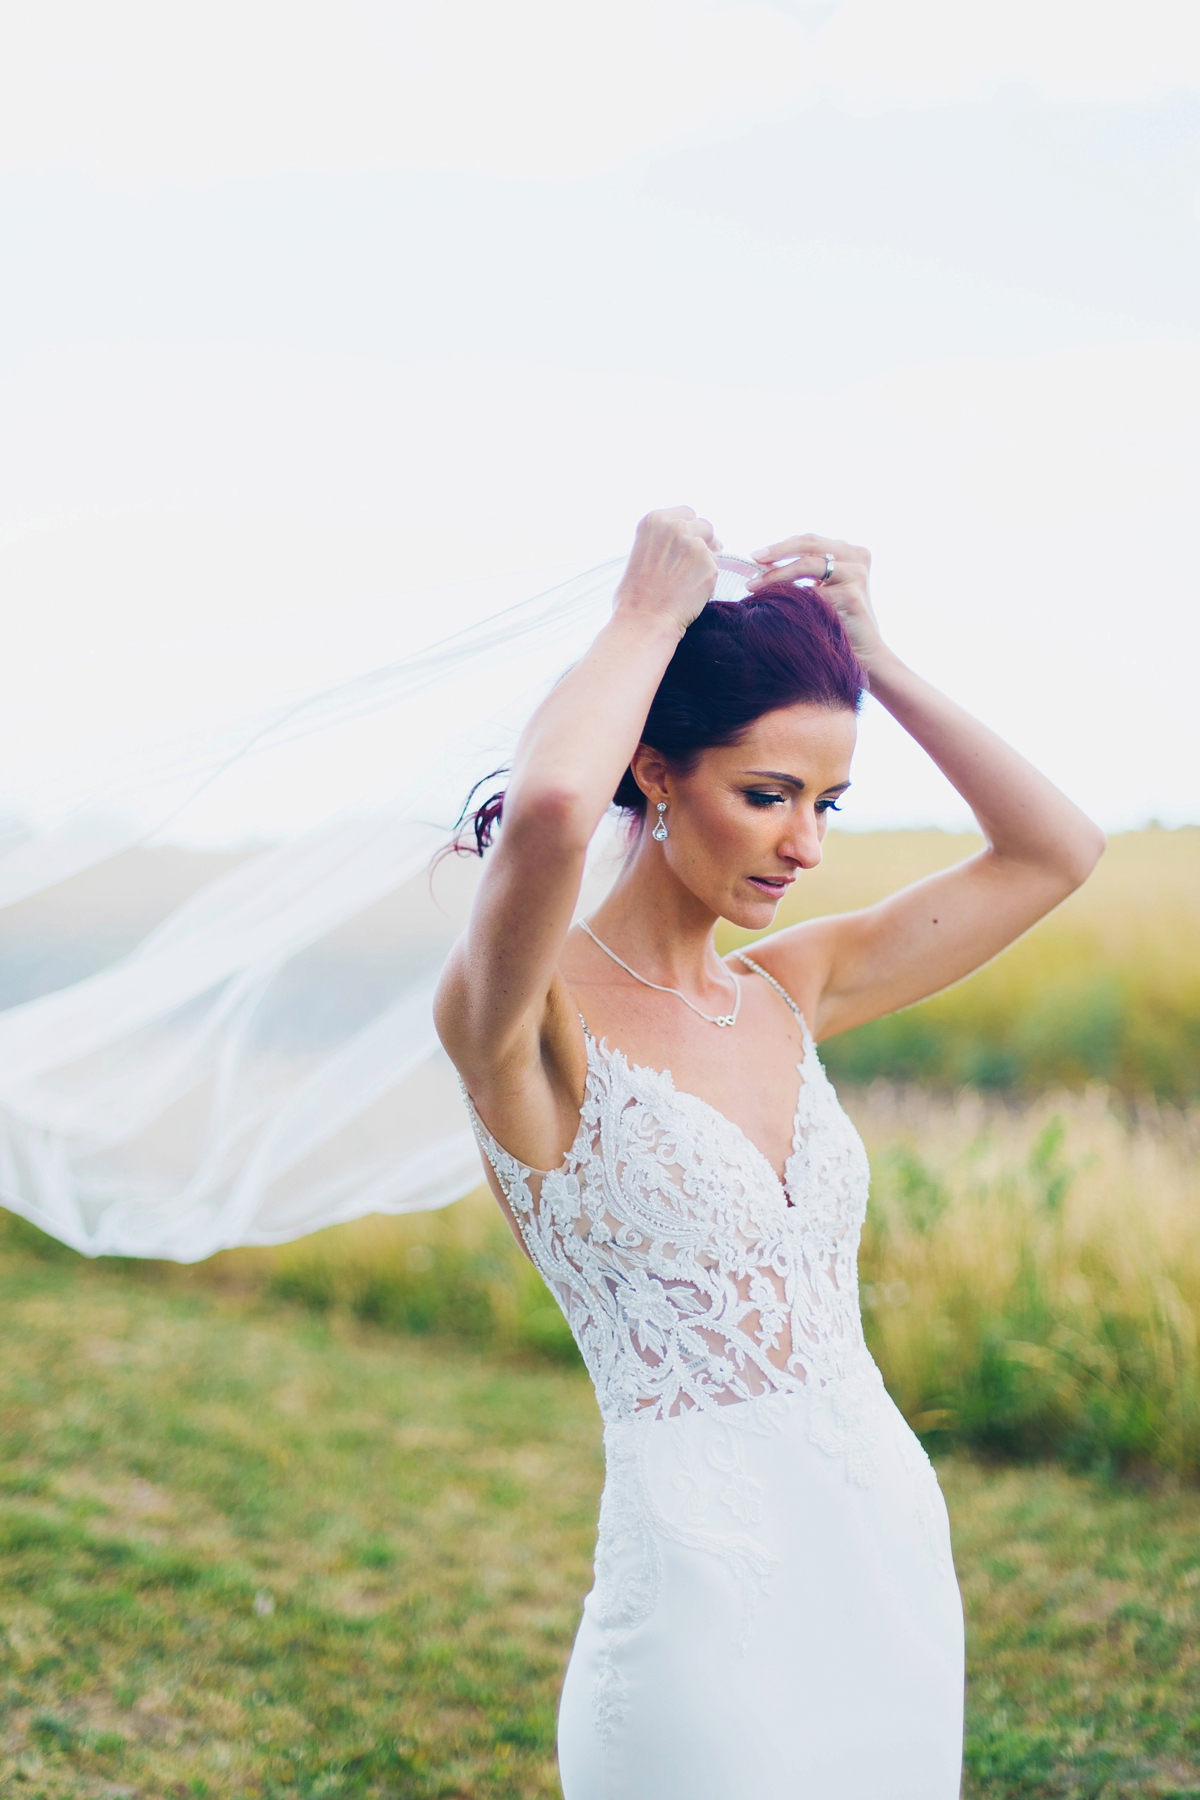 15 Enzoani lace dress romantic outdoor wedding ceremony